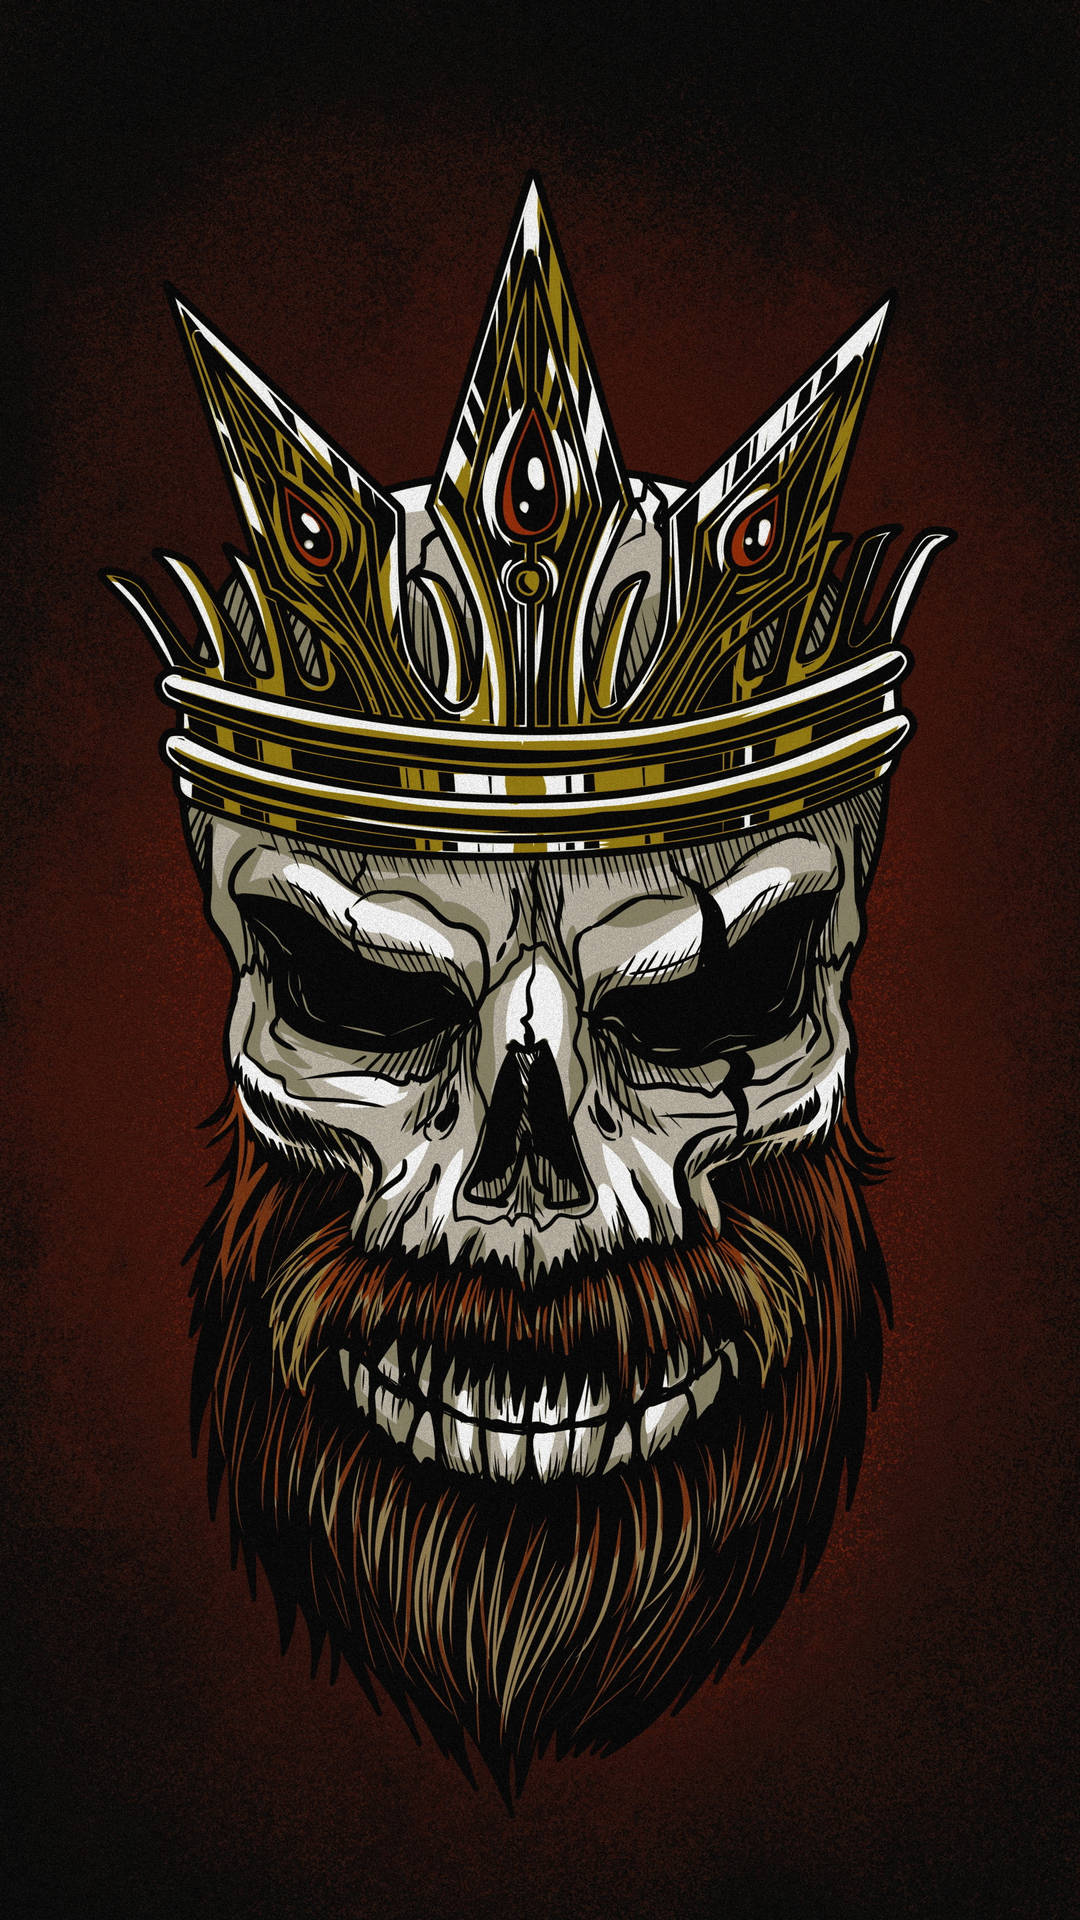 Beard Skull King Iphone Wallpaper